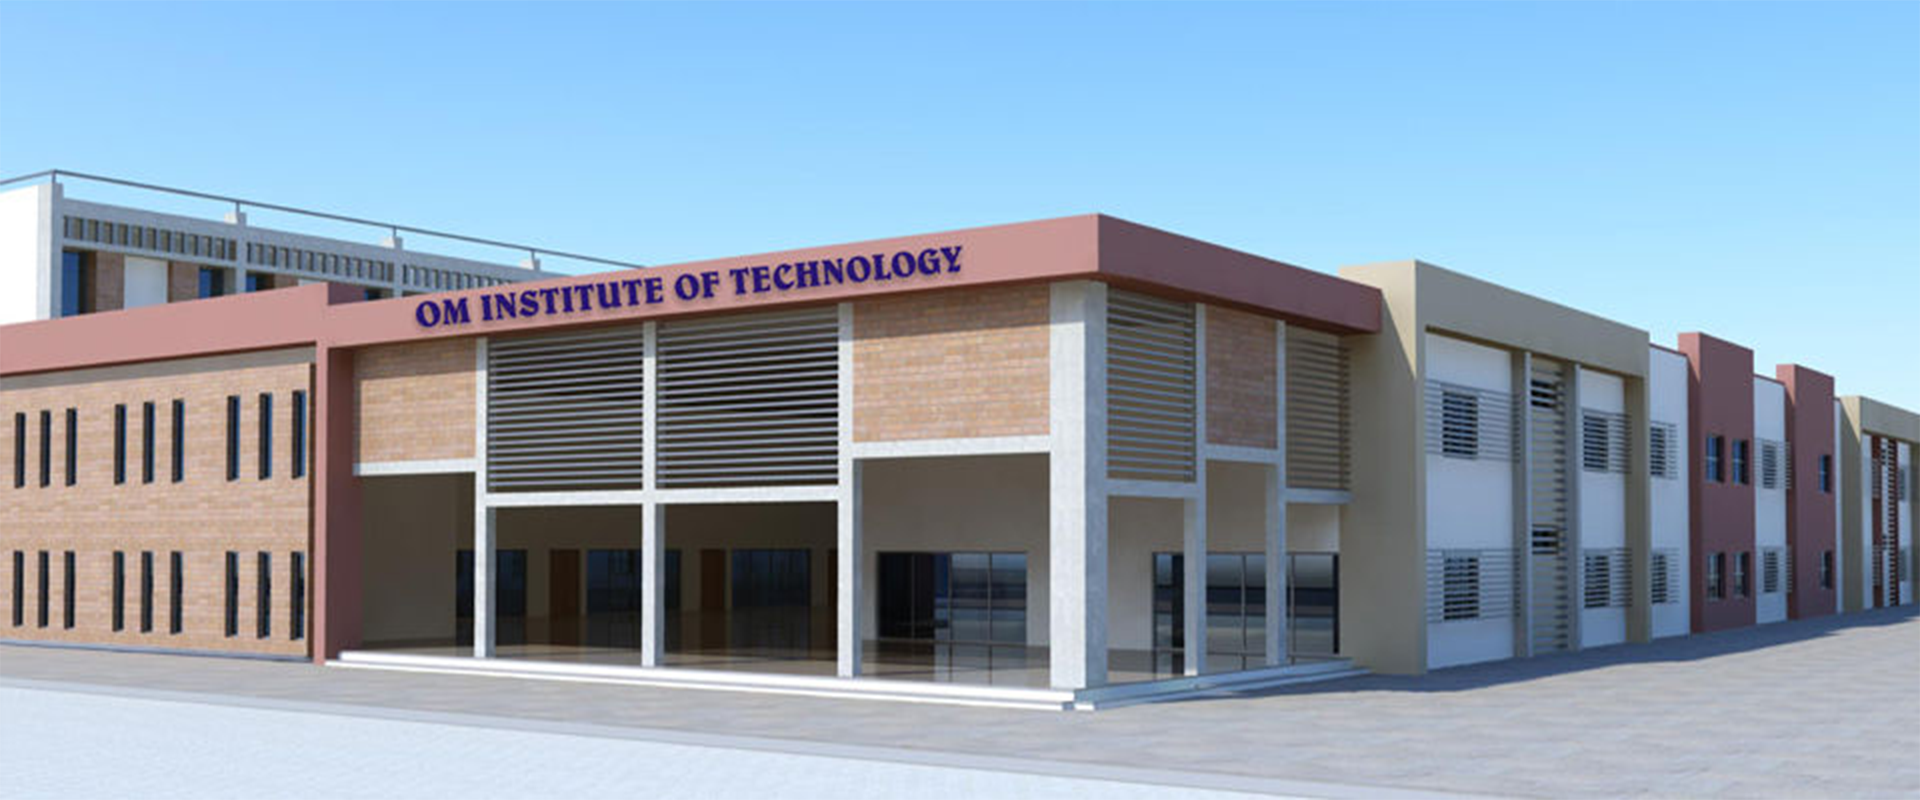 Om Institute of Technology